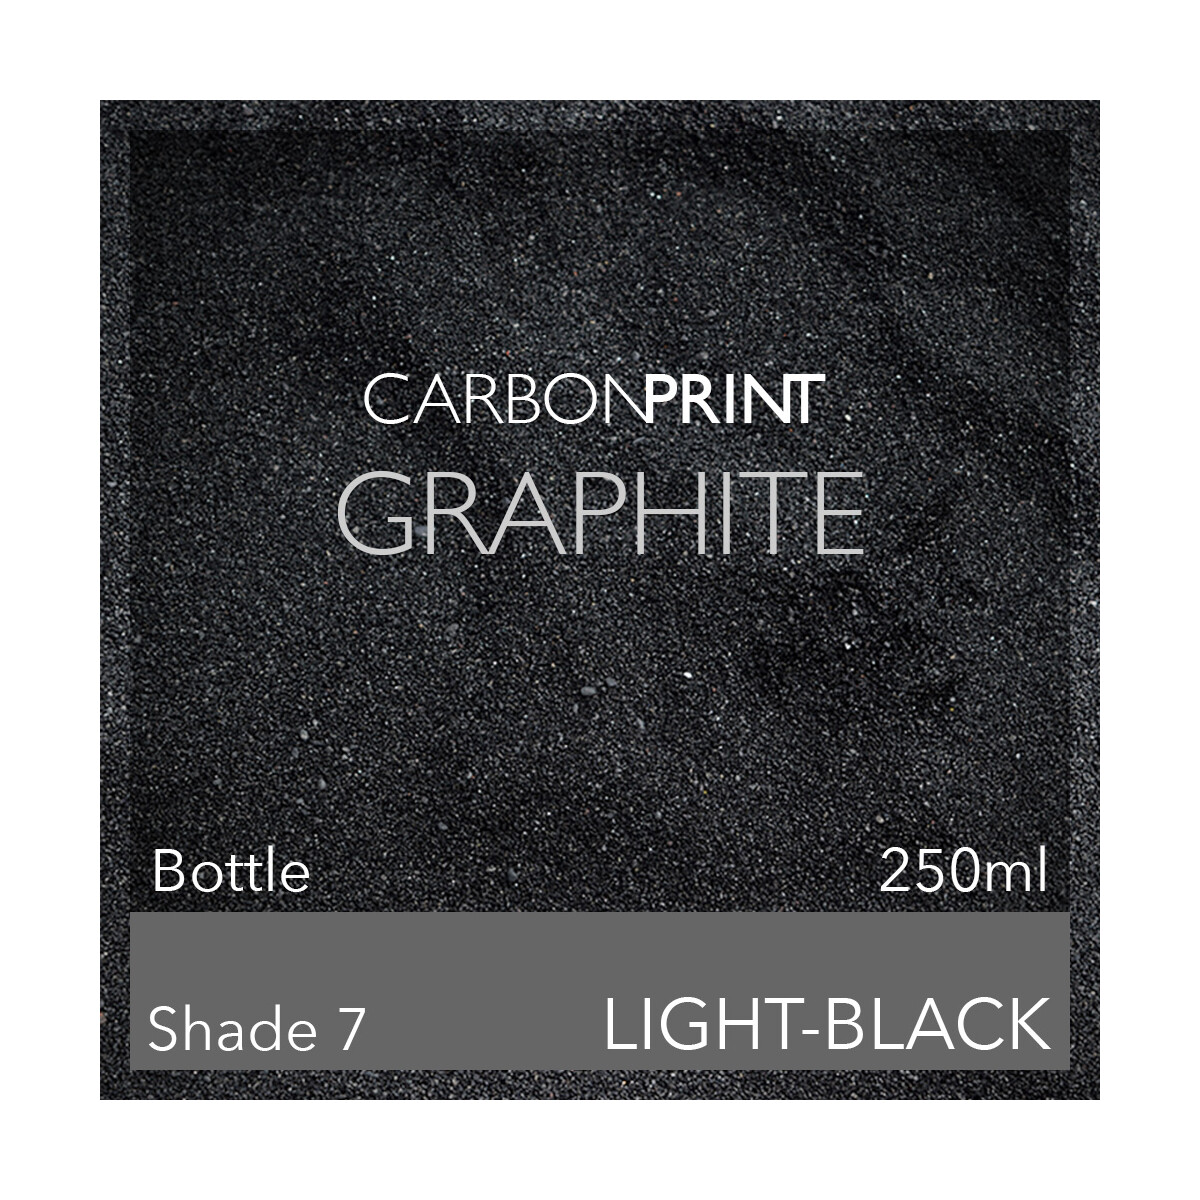 Carbonprint Graphite Shade7 Kanal LK / GY 250ml